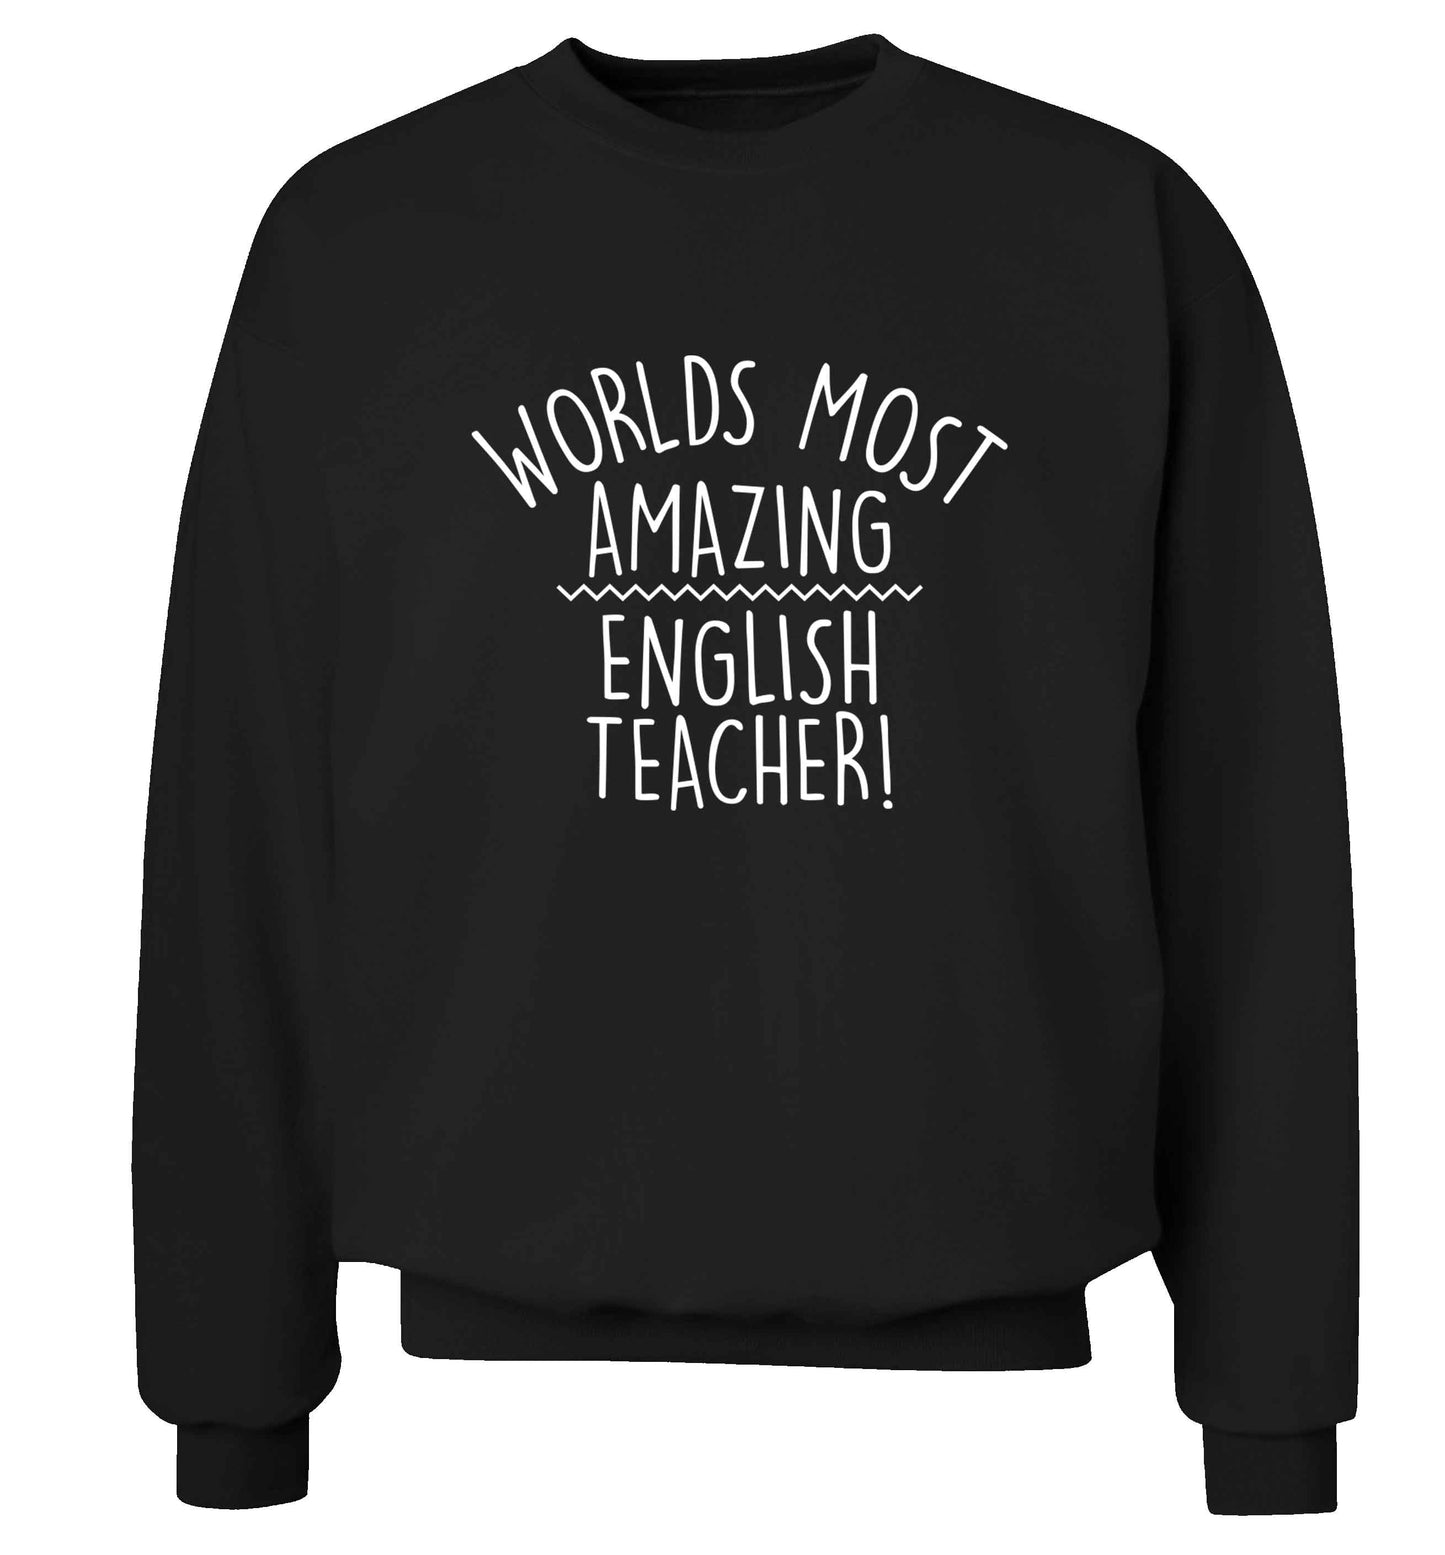 Worlds most amazing English teacher adult's unisex black sweater 2XL